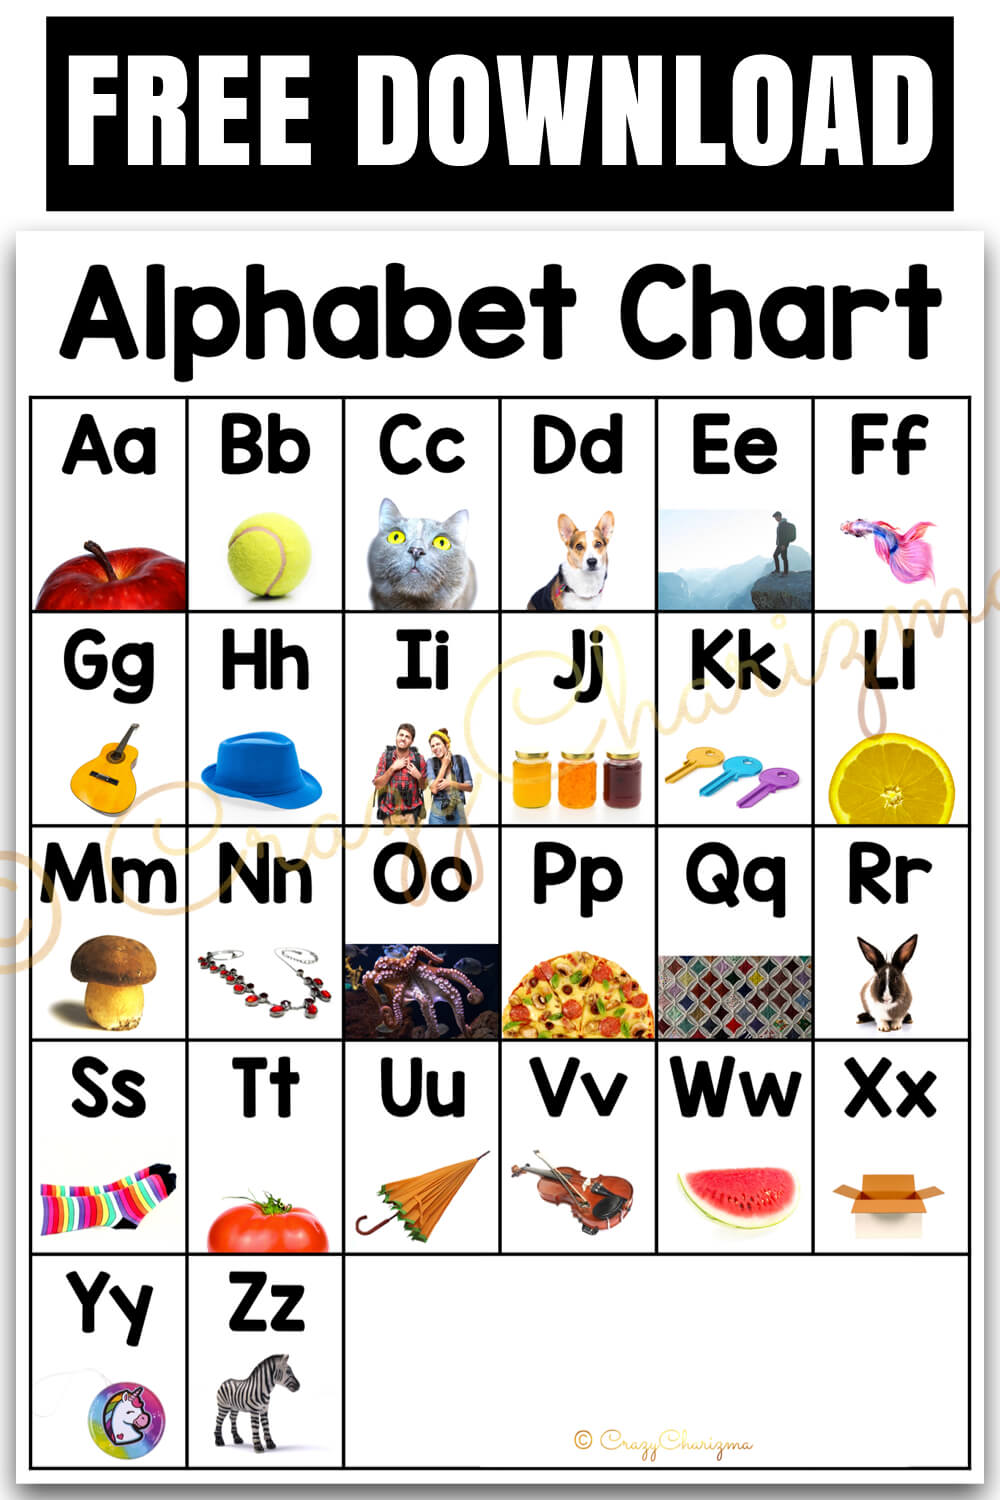 Alphabet Chart Free Download